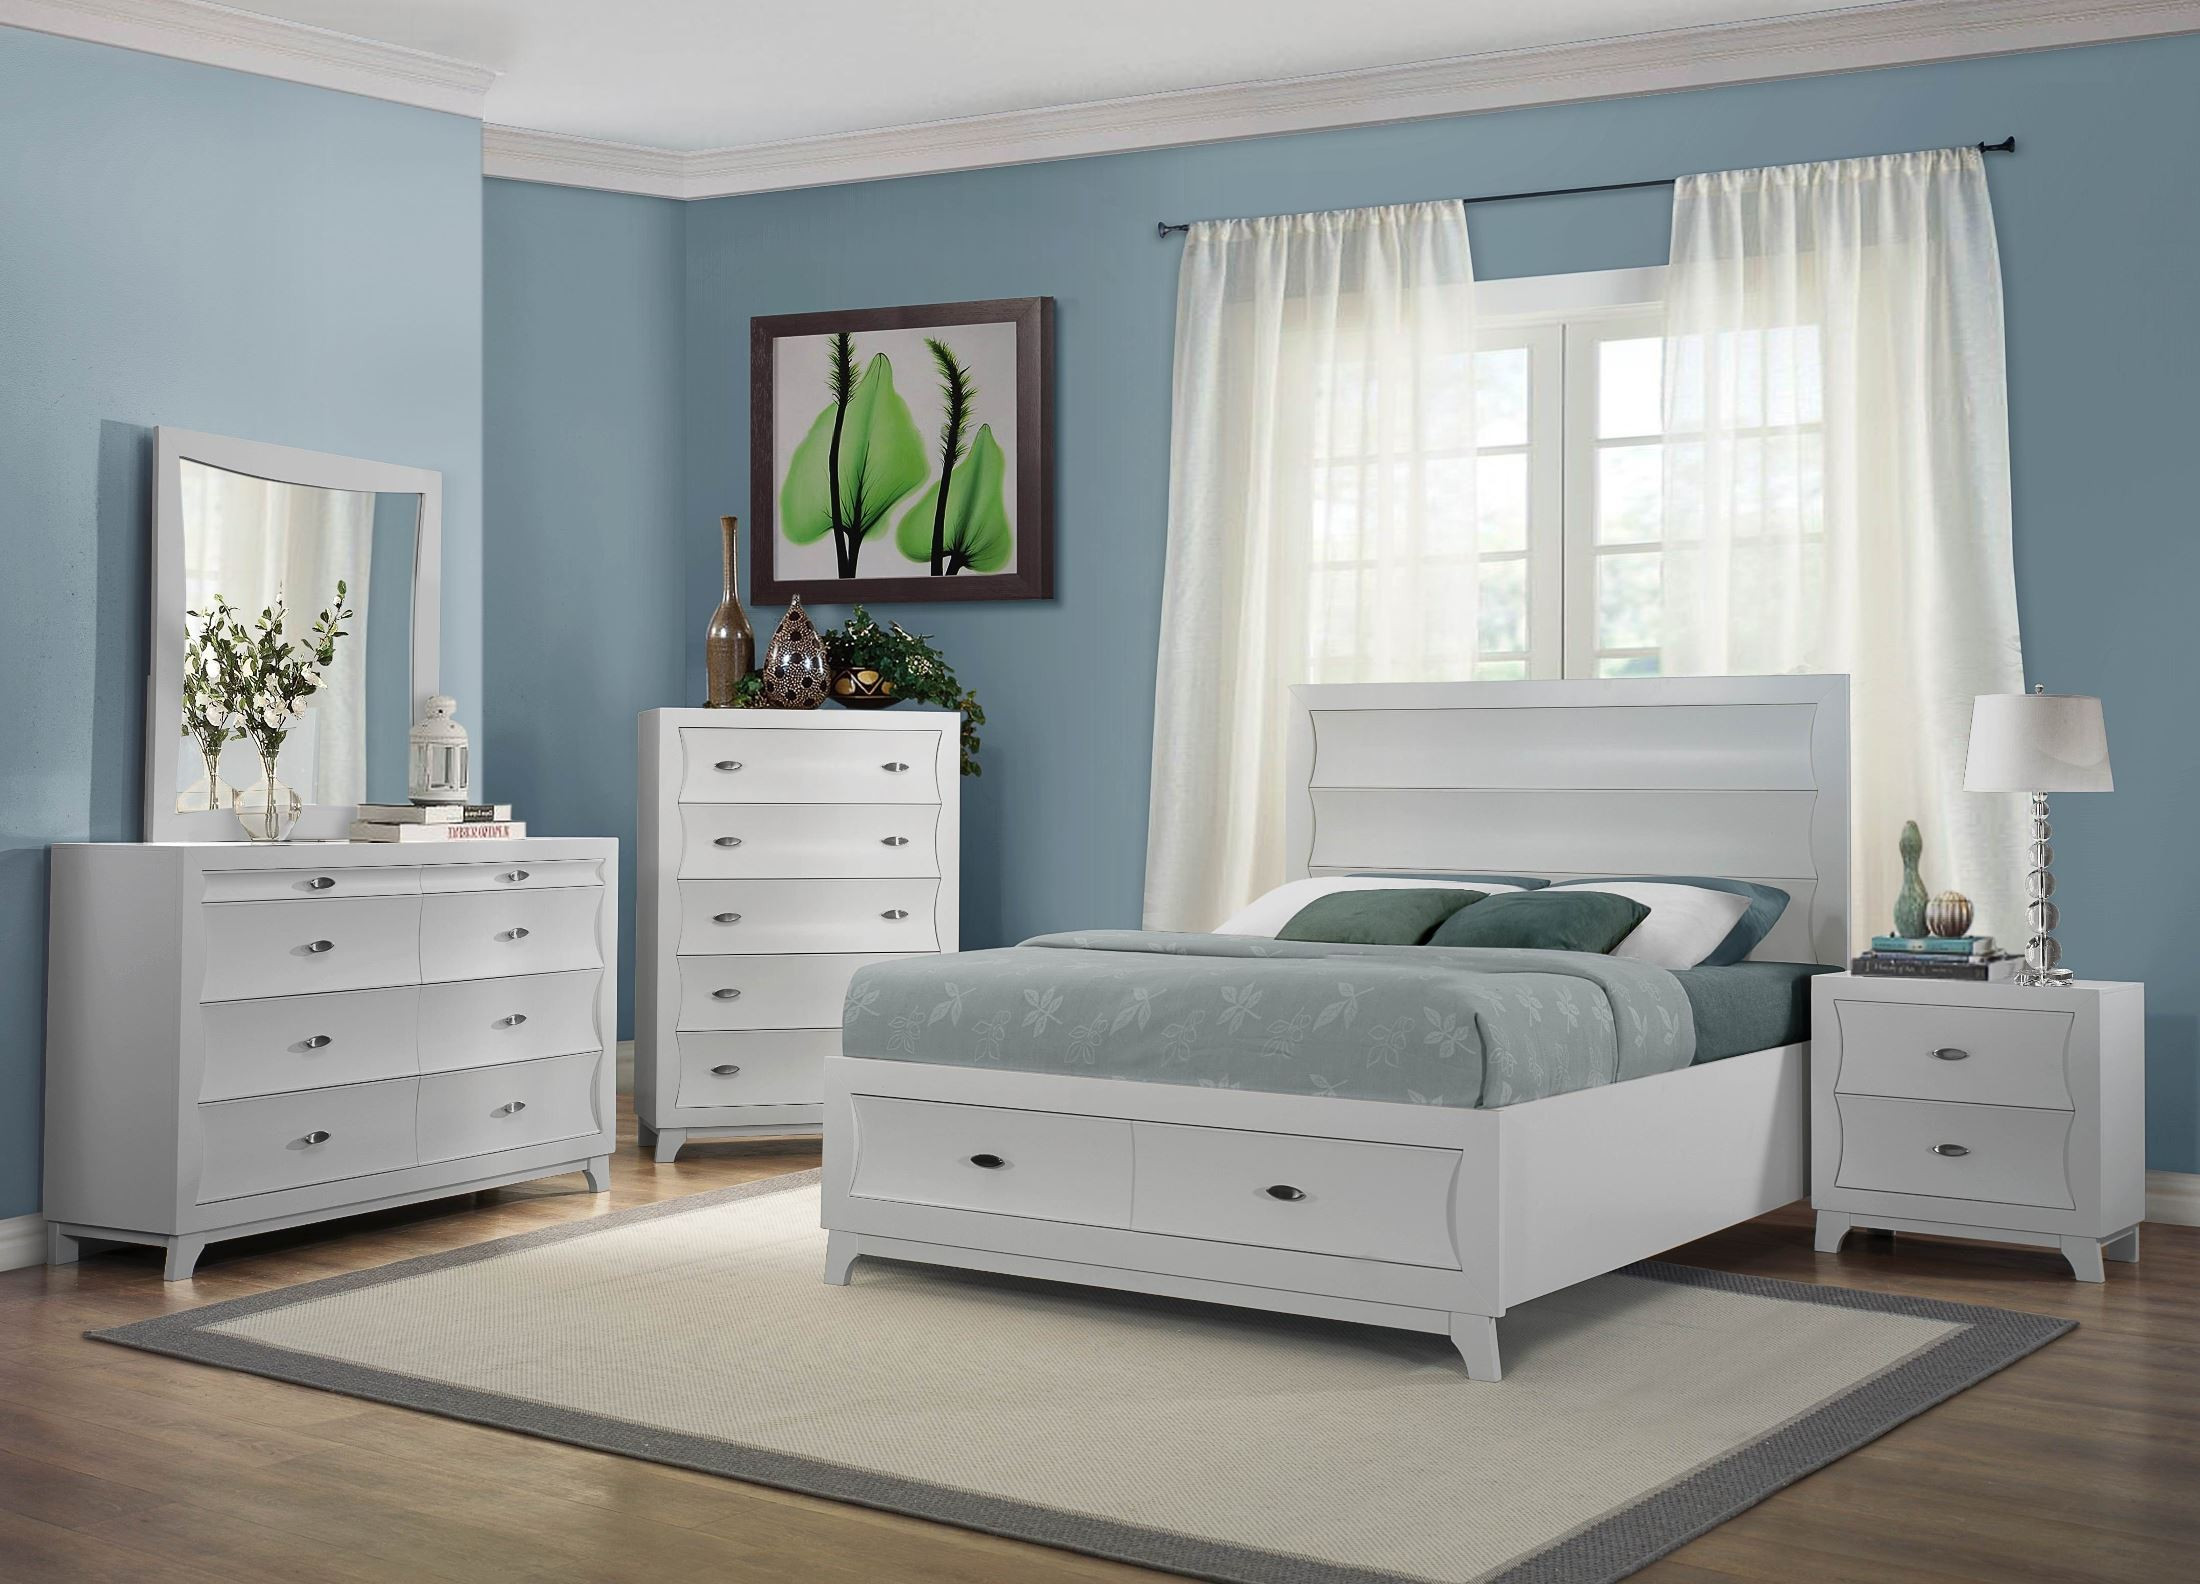 Bedroom Sets With Storage
 Zandra White Platform Storage Bedroom Set from Homelegance